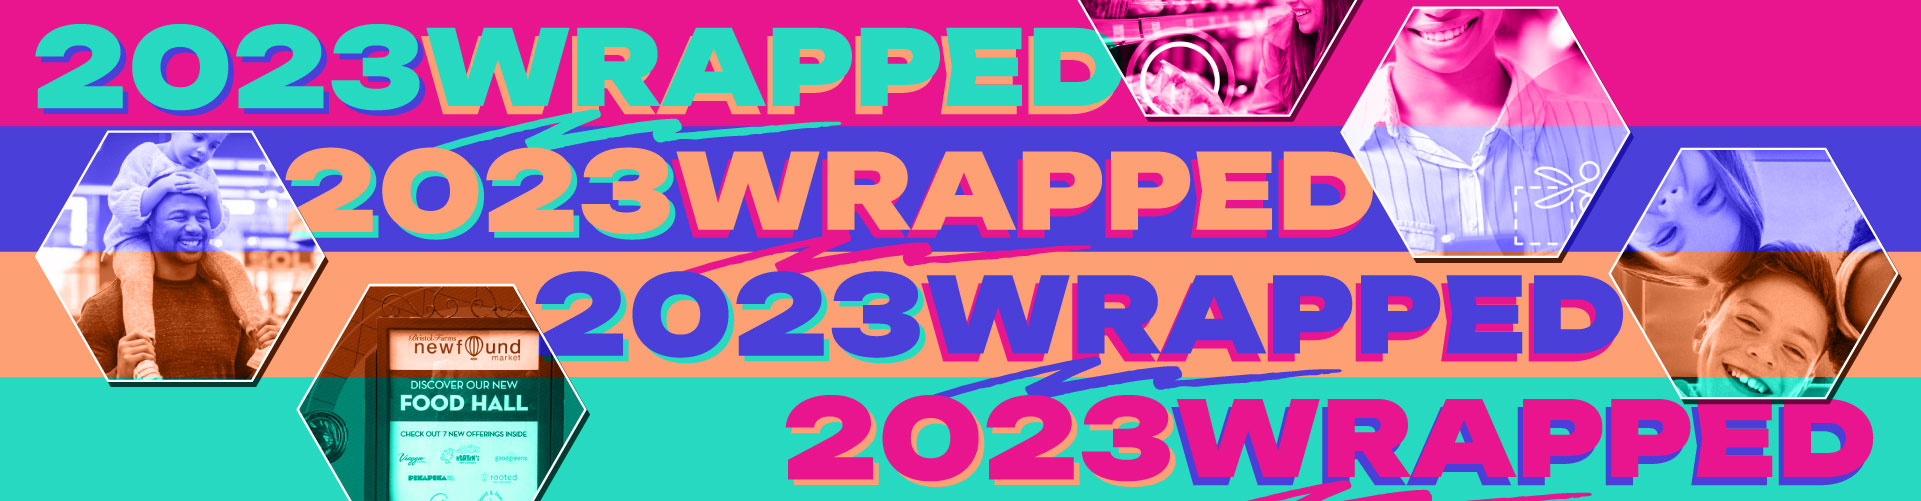 Retail Safari 2023 Wrapped Blog main banner